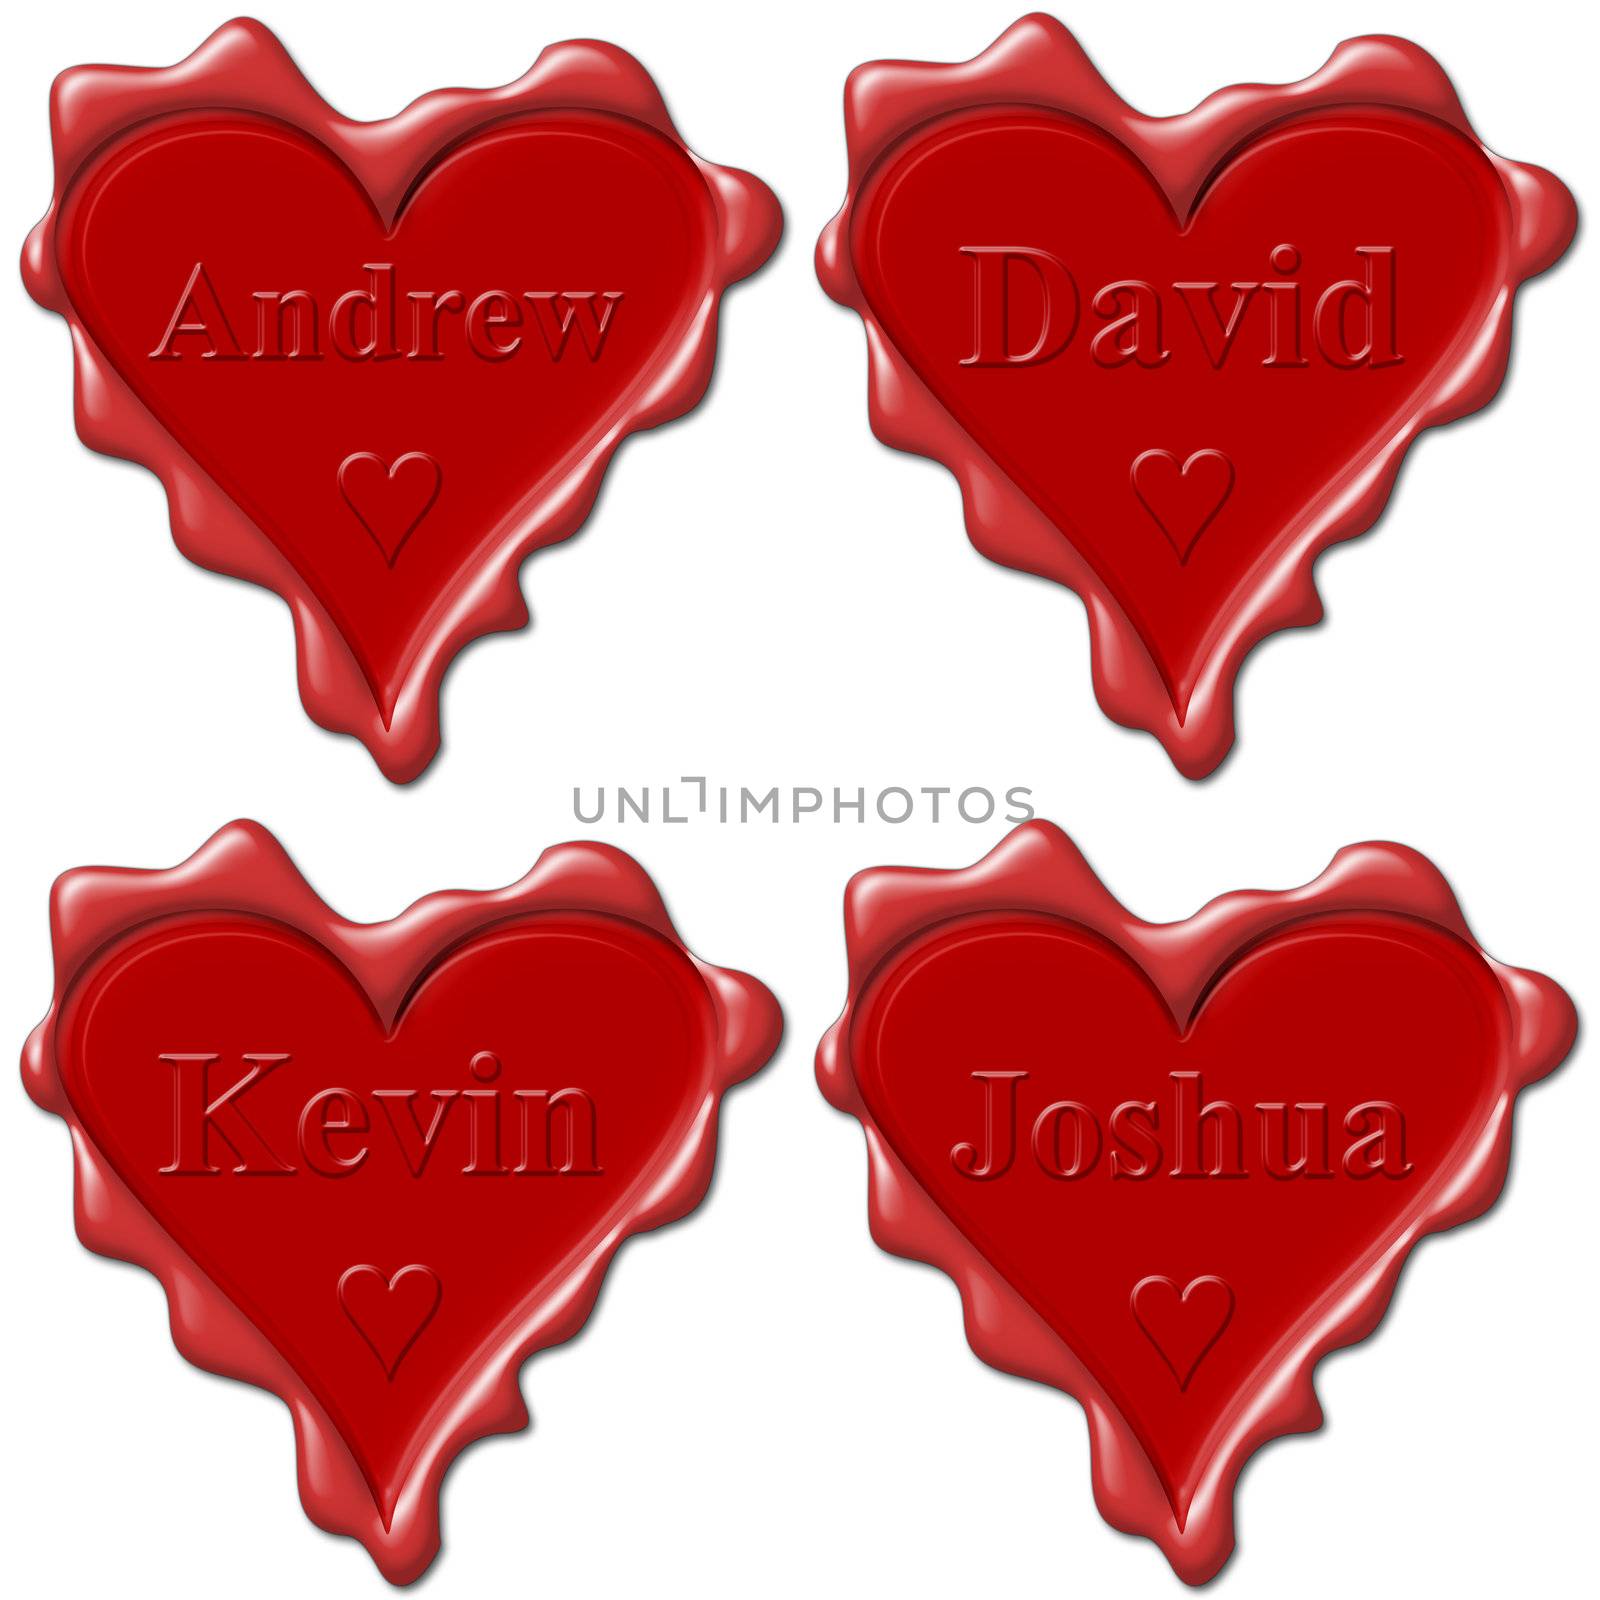 Valentine love hearts with names: Andrew, David, Kevin, Joshua